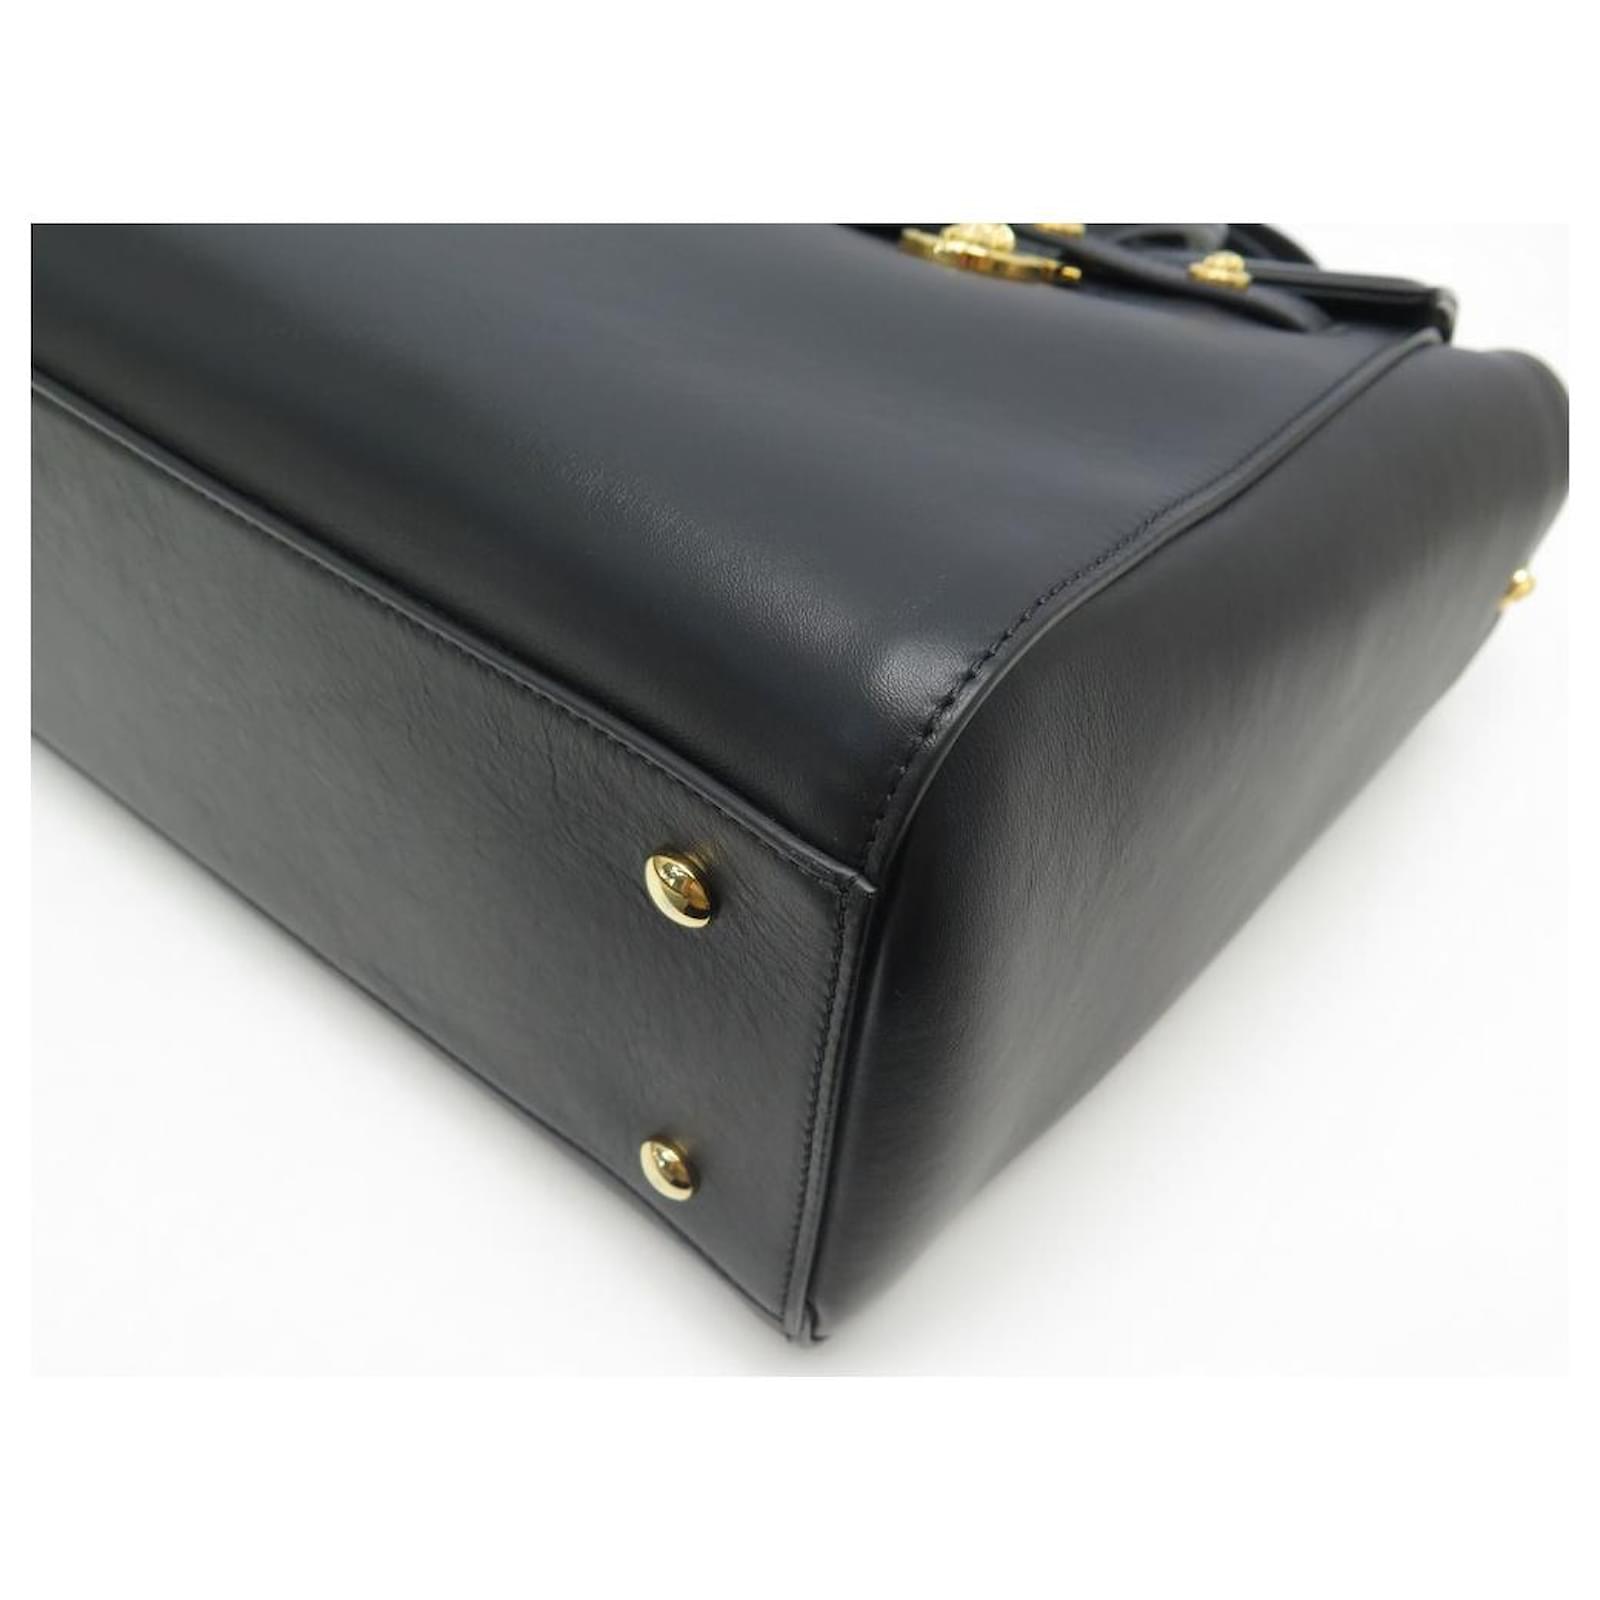 Versace logo Leather Handbag -  Worldwide Shipping